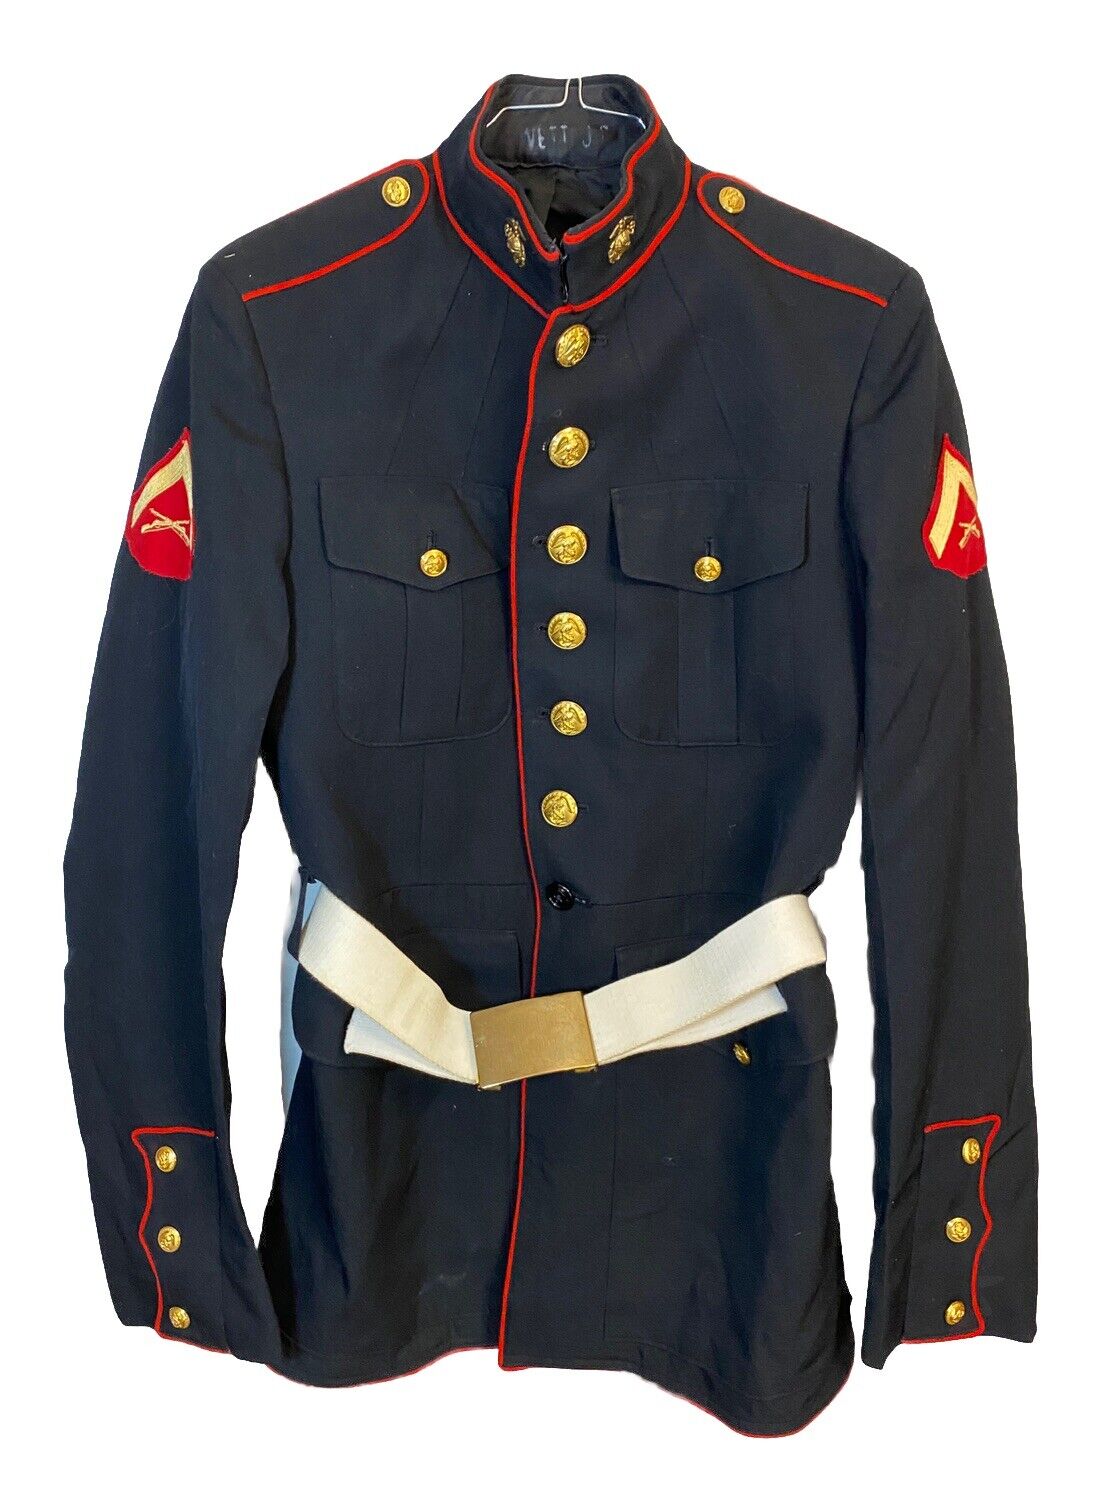 USMC Marine Corps Dress Blues Jacket Top W/ LCPL Patch & EGAs 40L & Belt